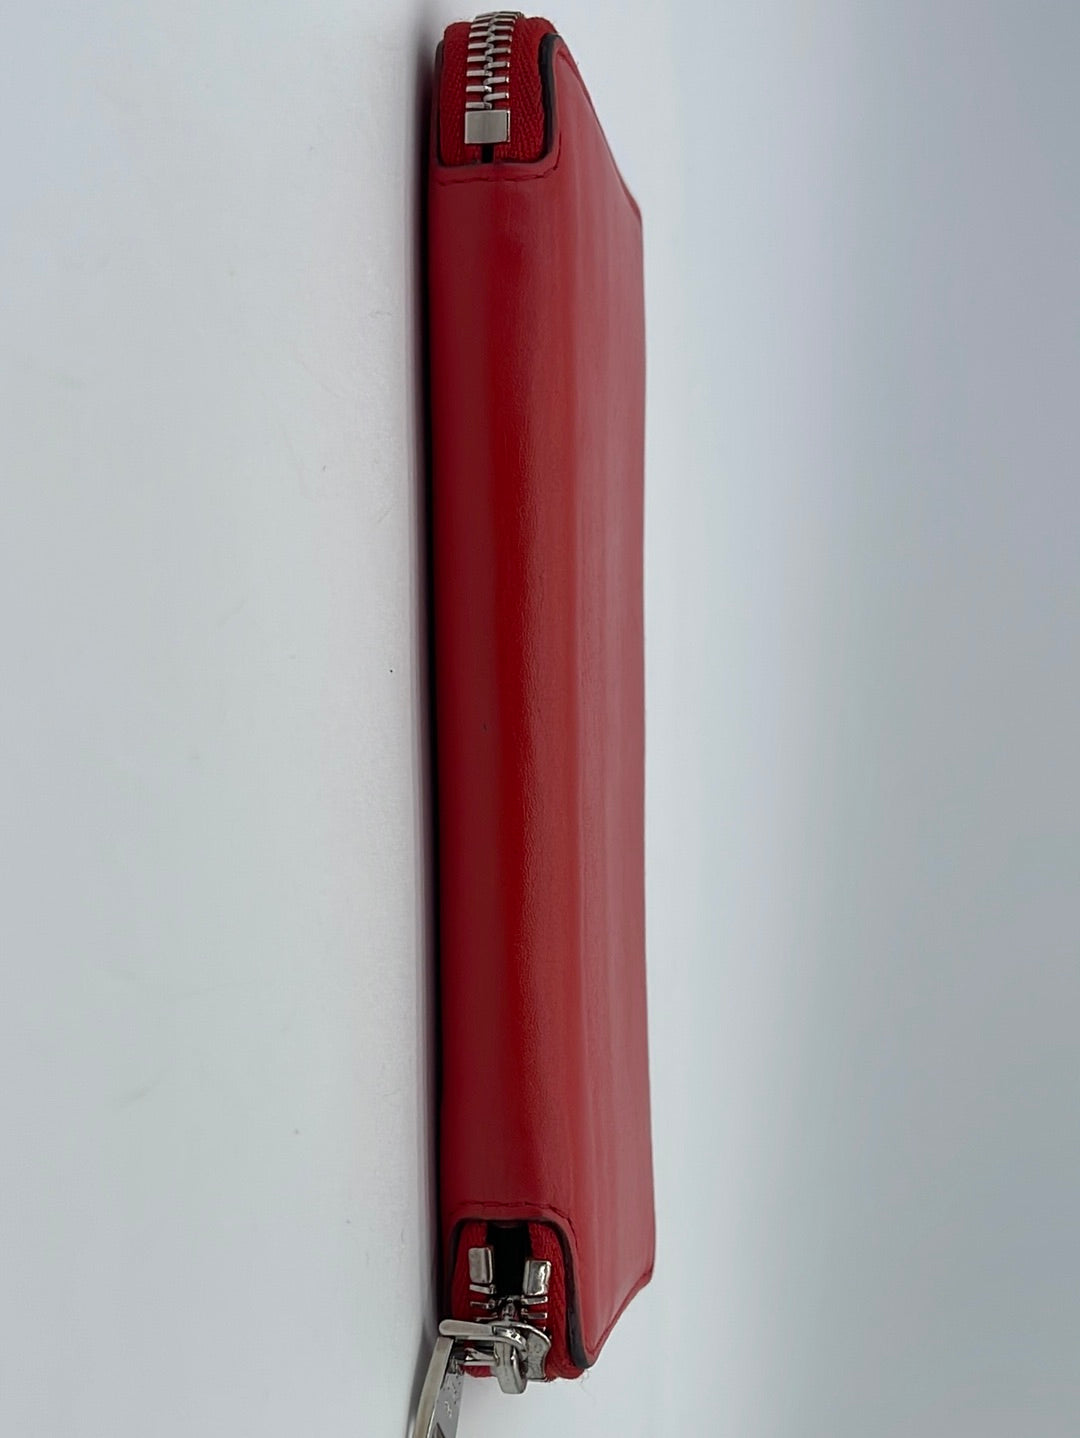 Preloved Louis Vuitton Epi Leather Zippy Wallet Red